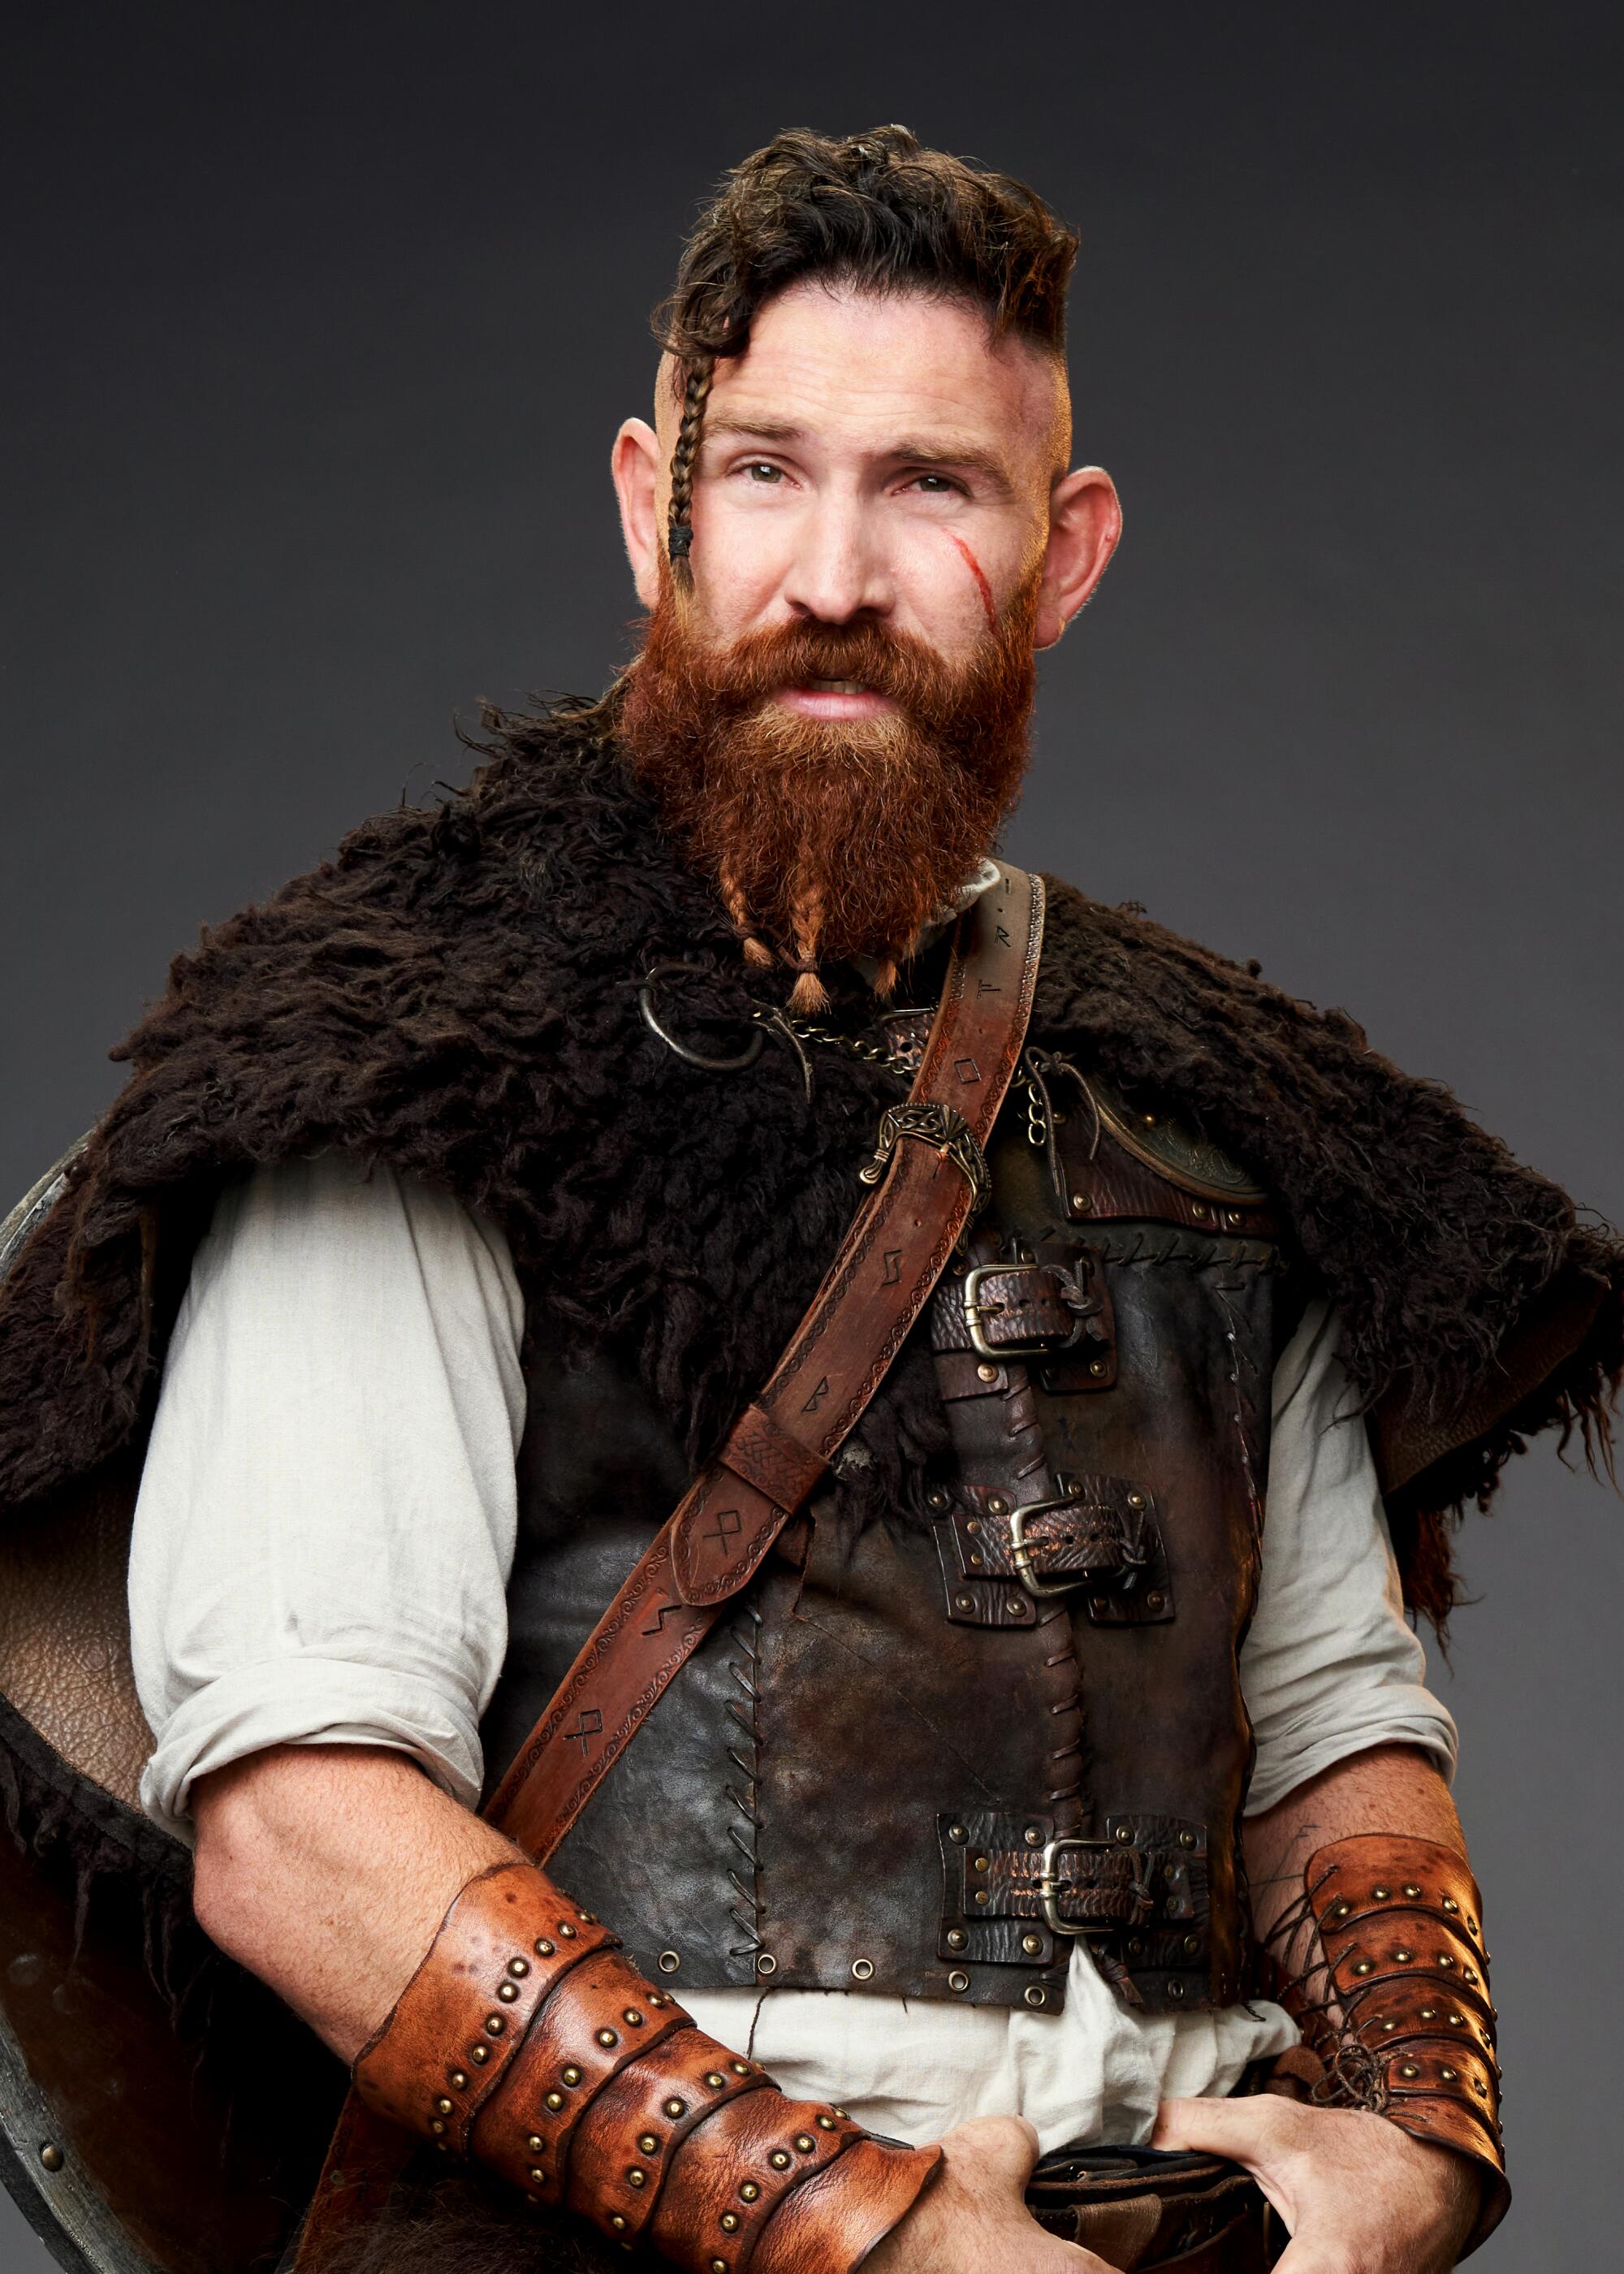 Devan Long as Thorfinn, wears Viking garb